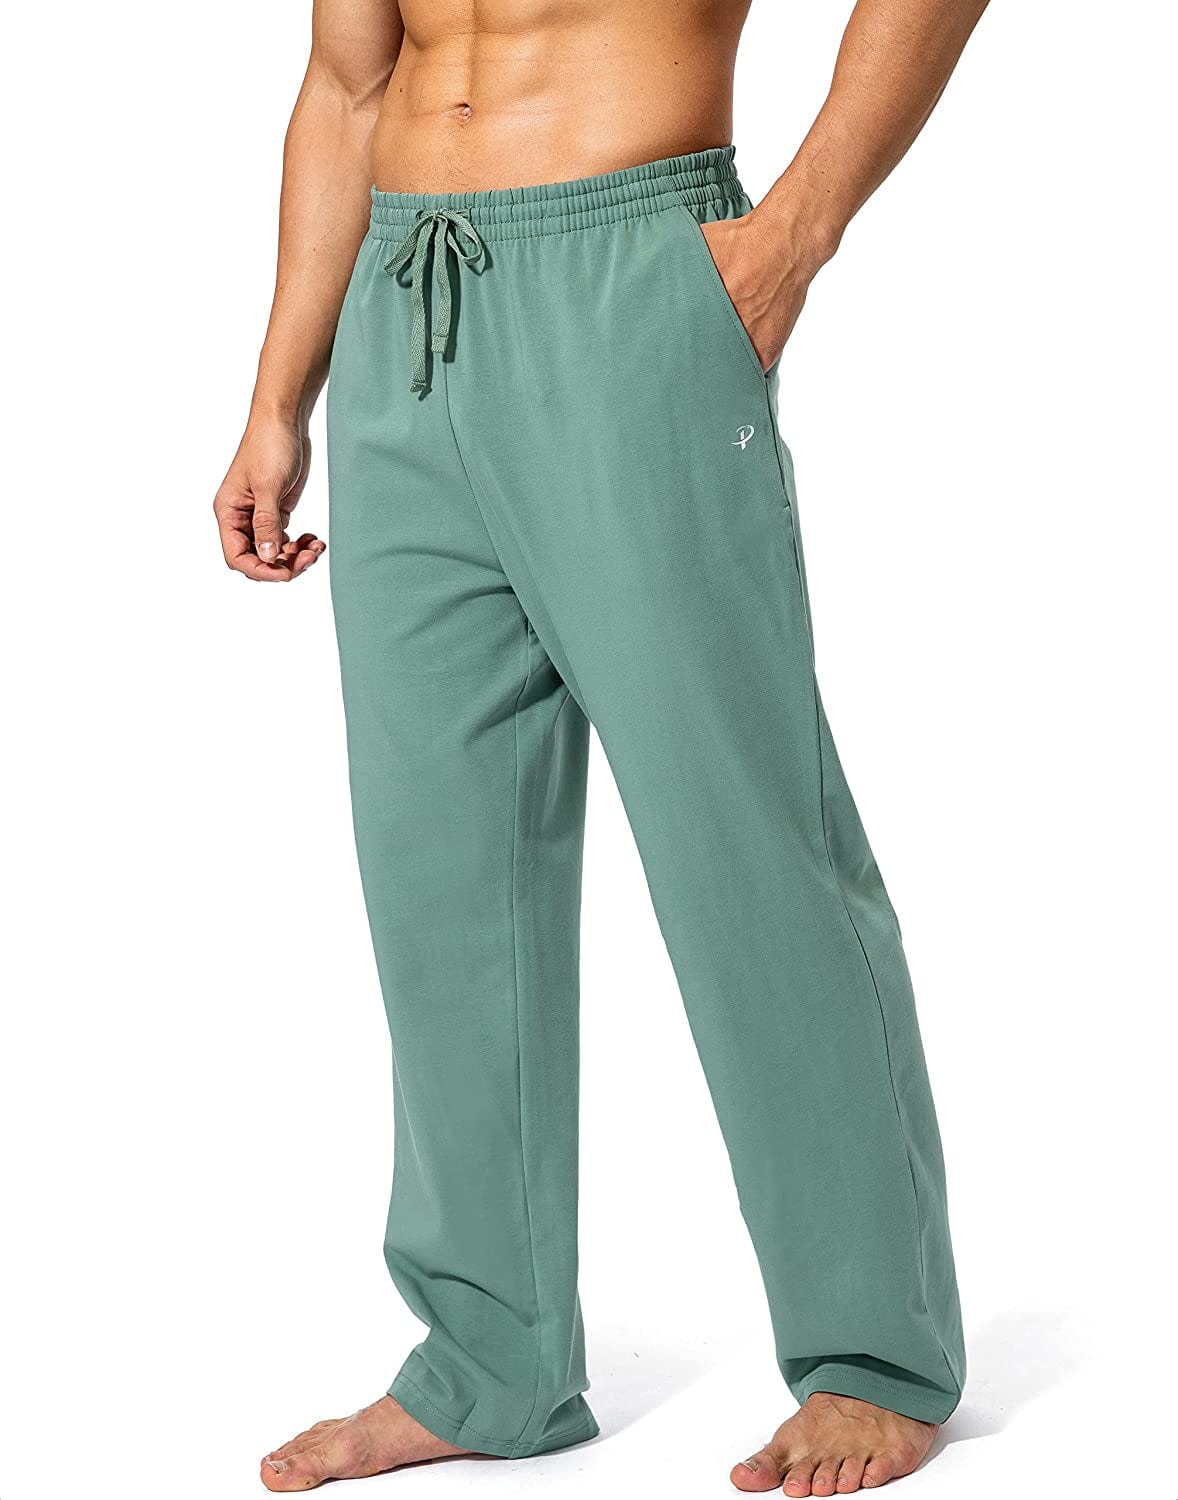 YUHAOTIN Yoga Pants with Pockets Women Panties Cotton Hipster Mens